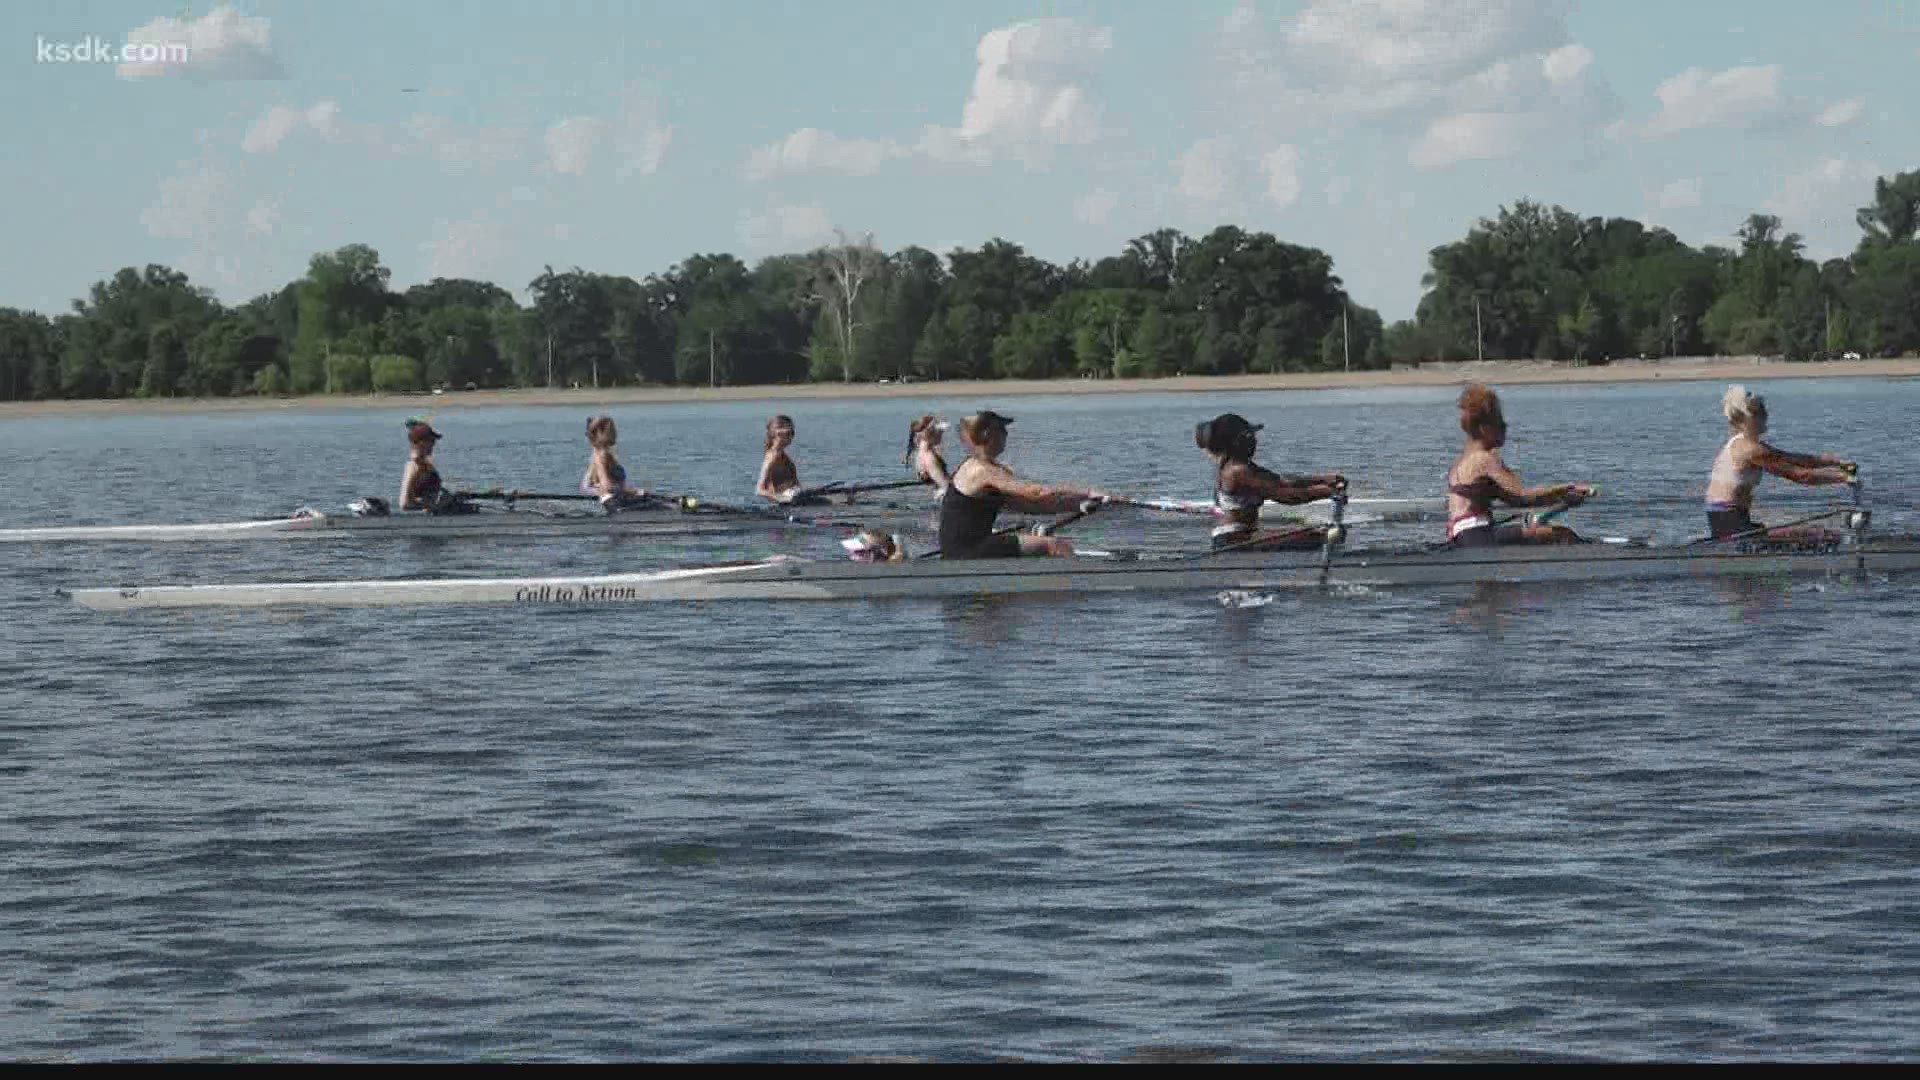 St Louis Rowing Club Winning Getting Kids To College Ksdk Com